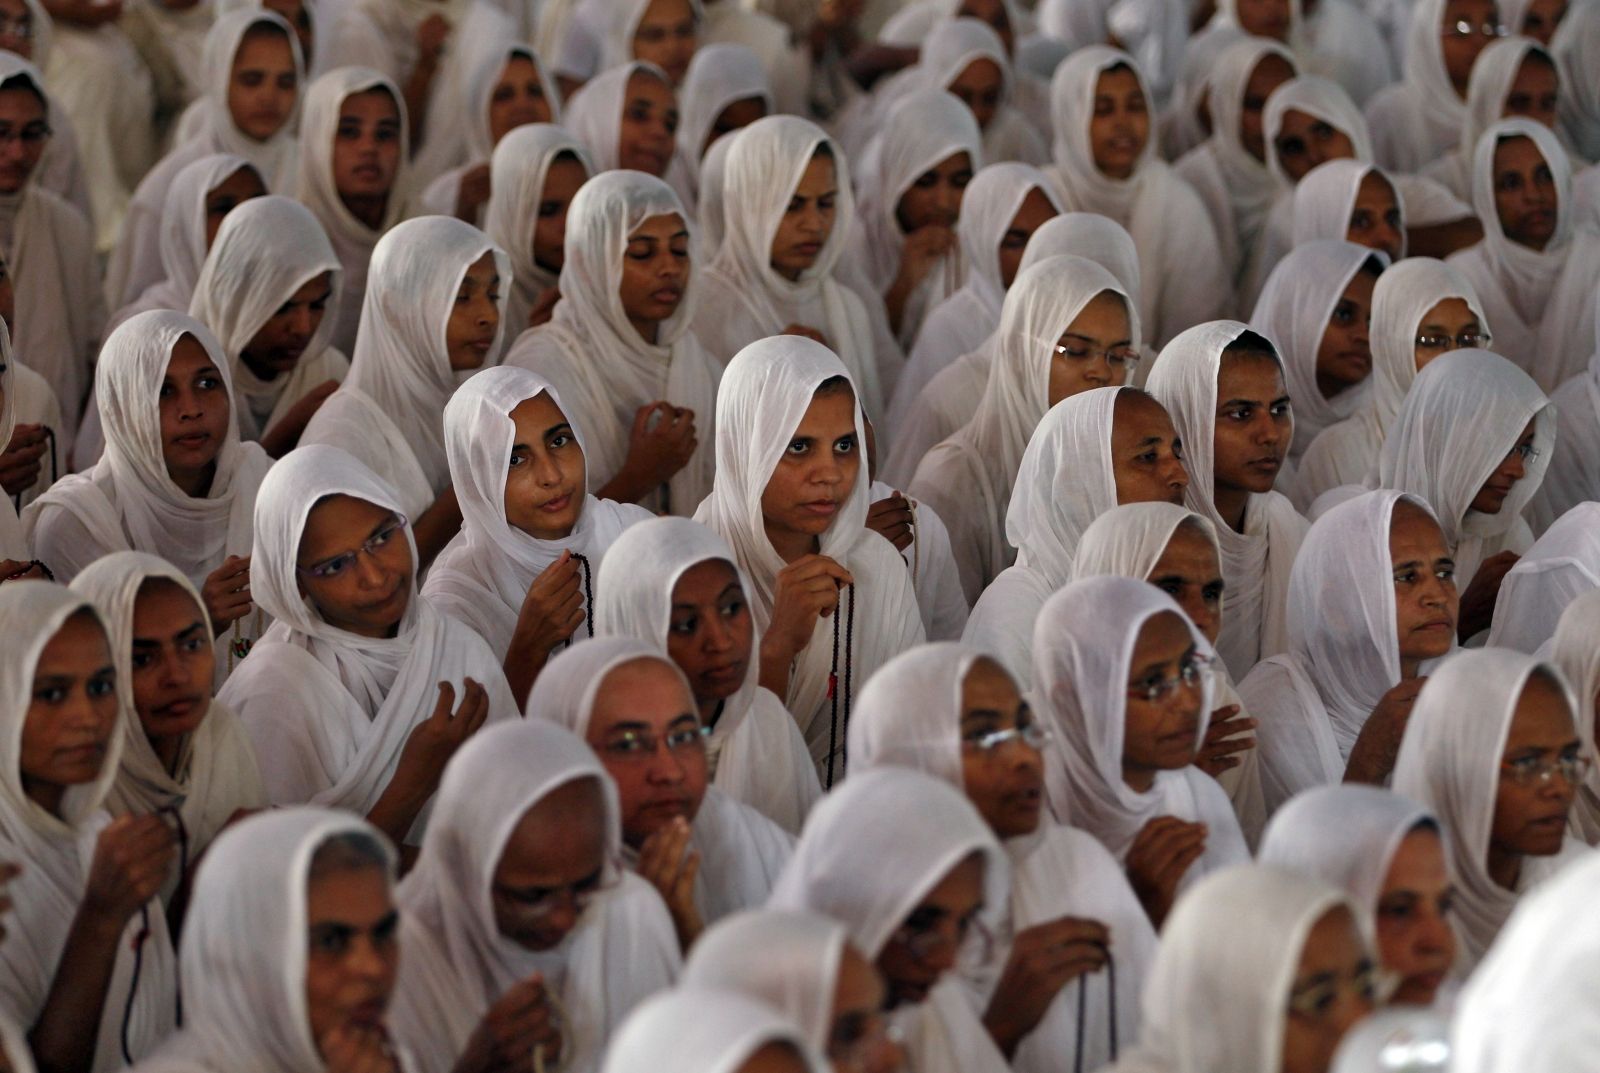 'Religious suicide' remains legal in India